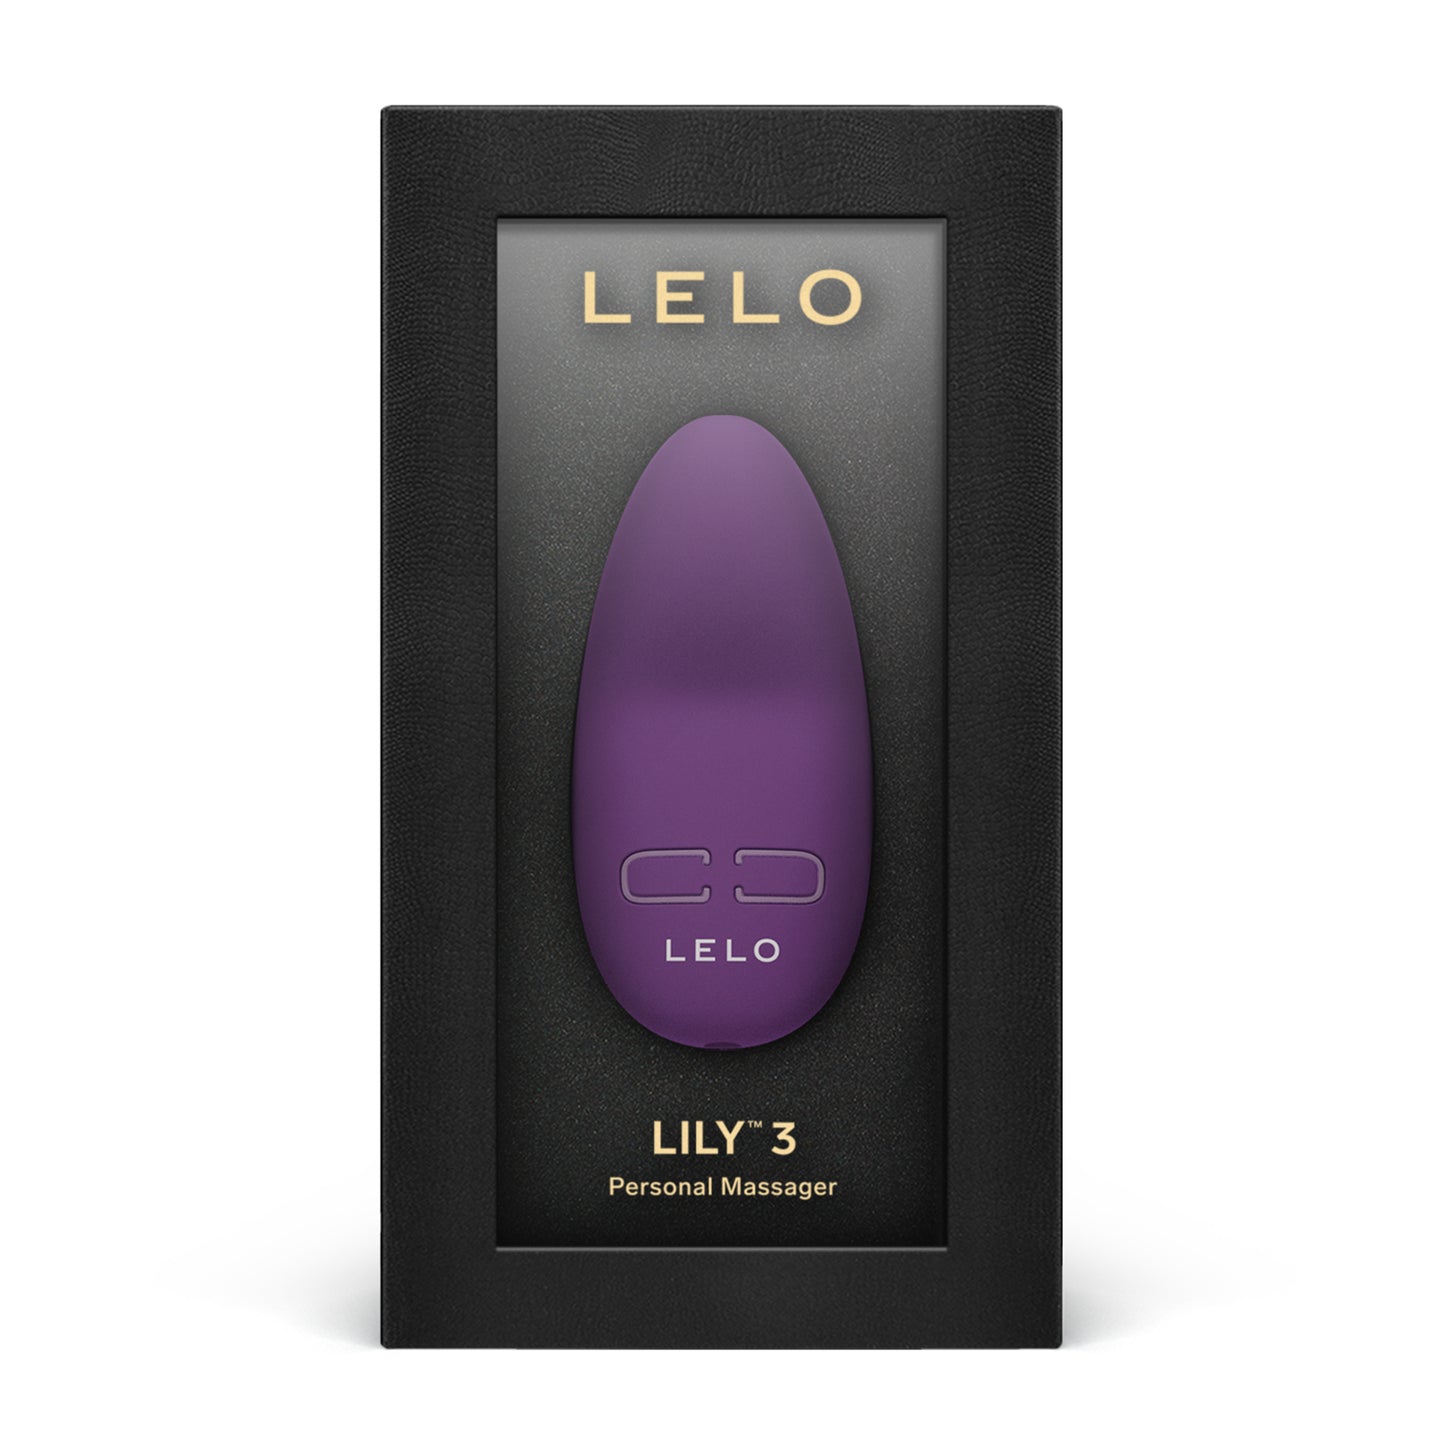 Lelo - Lily 3 Personal Massager Dark Plum - 3